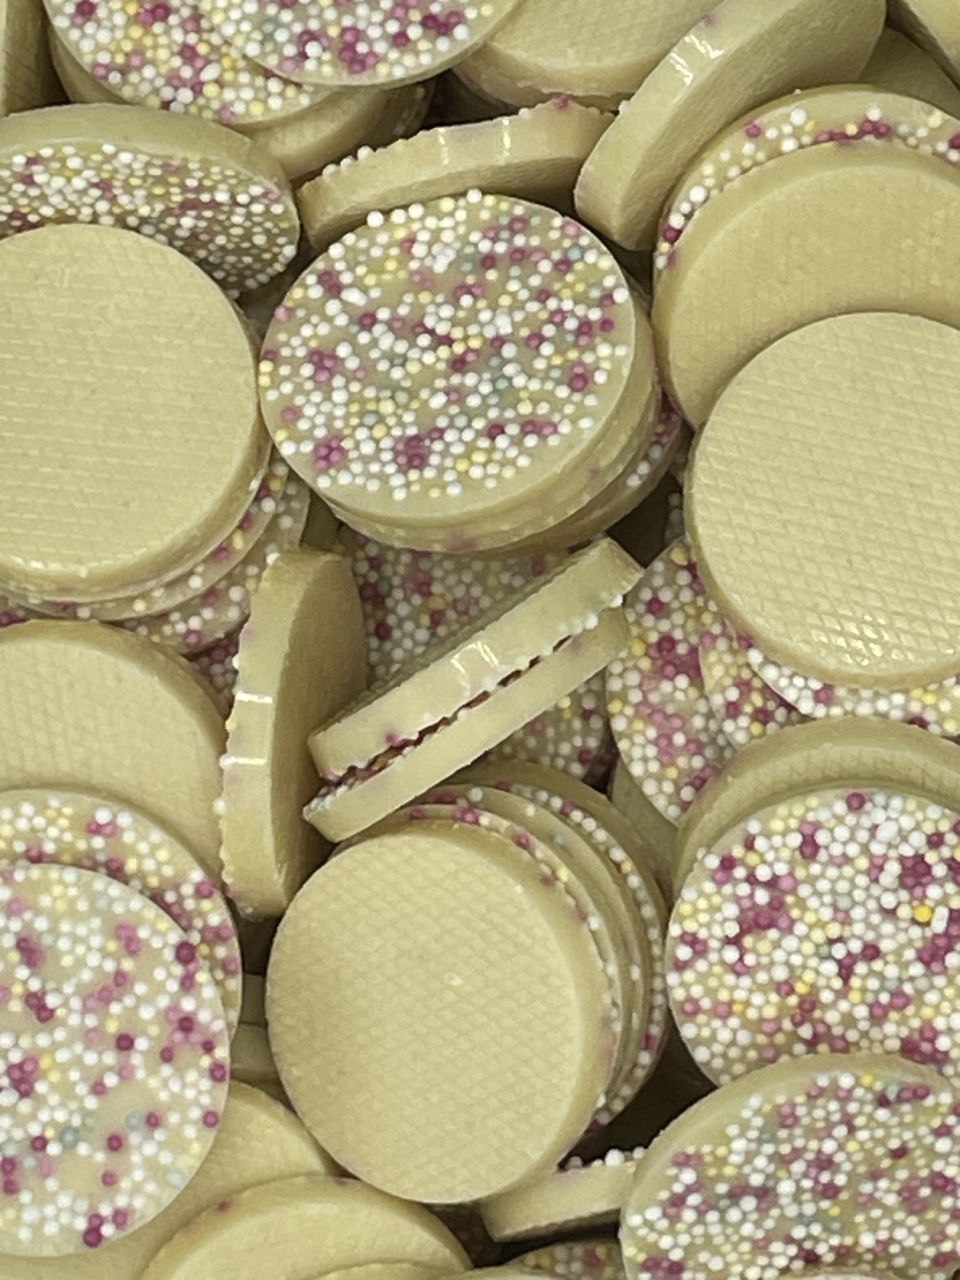 Sprinkled White Chocolate Discs